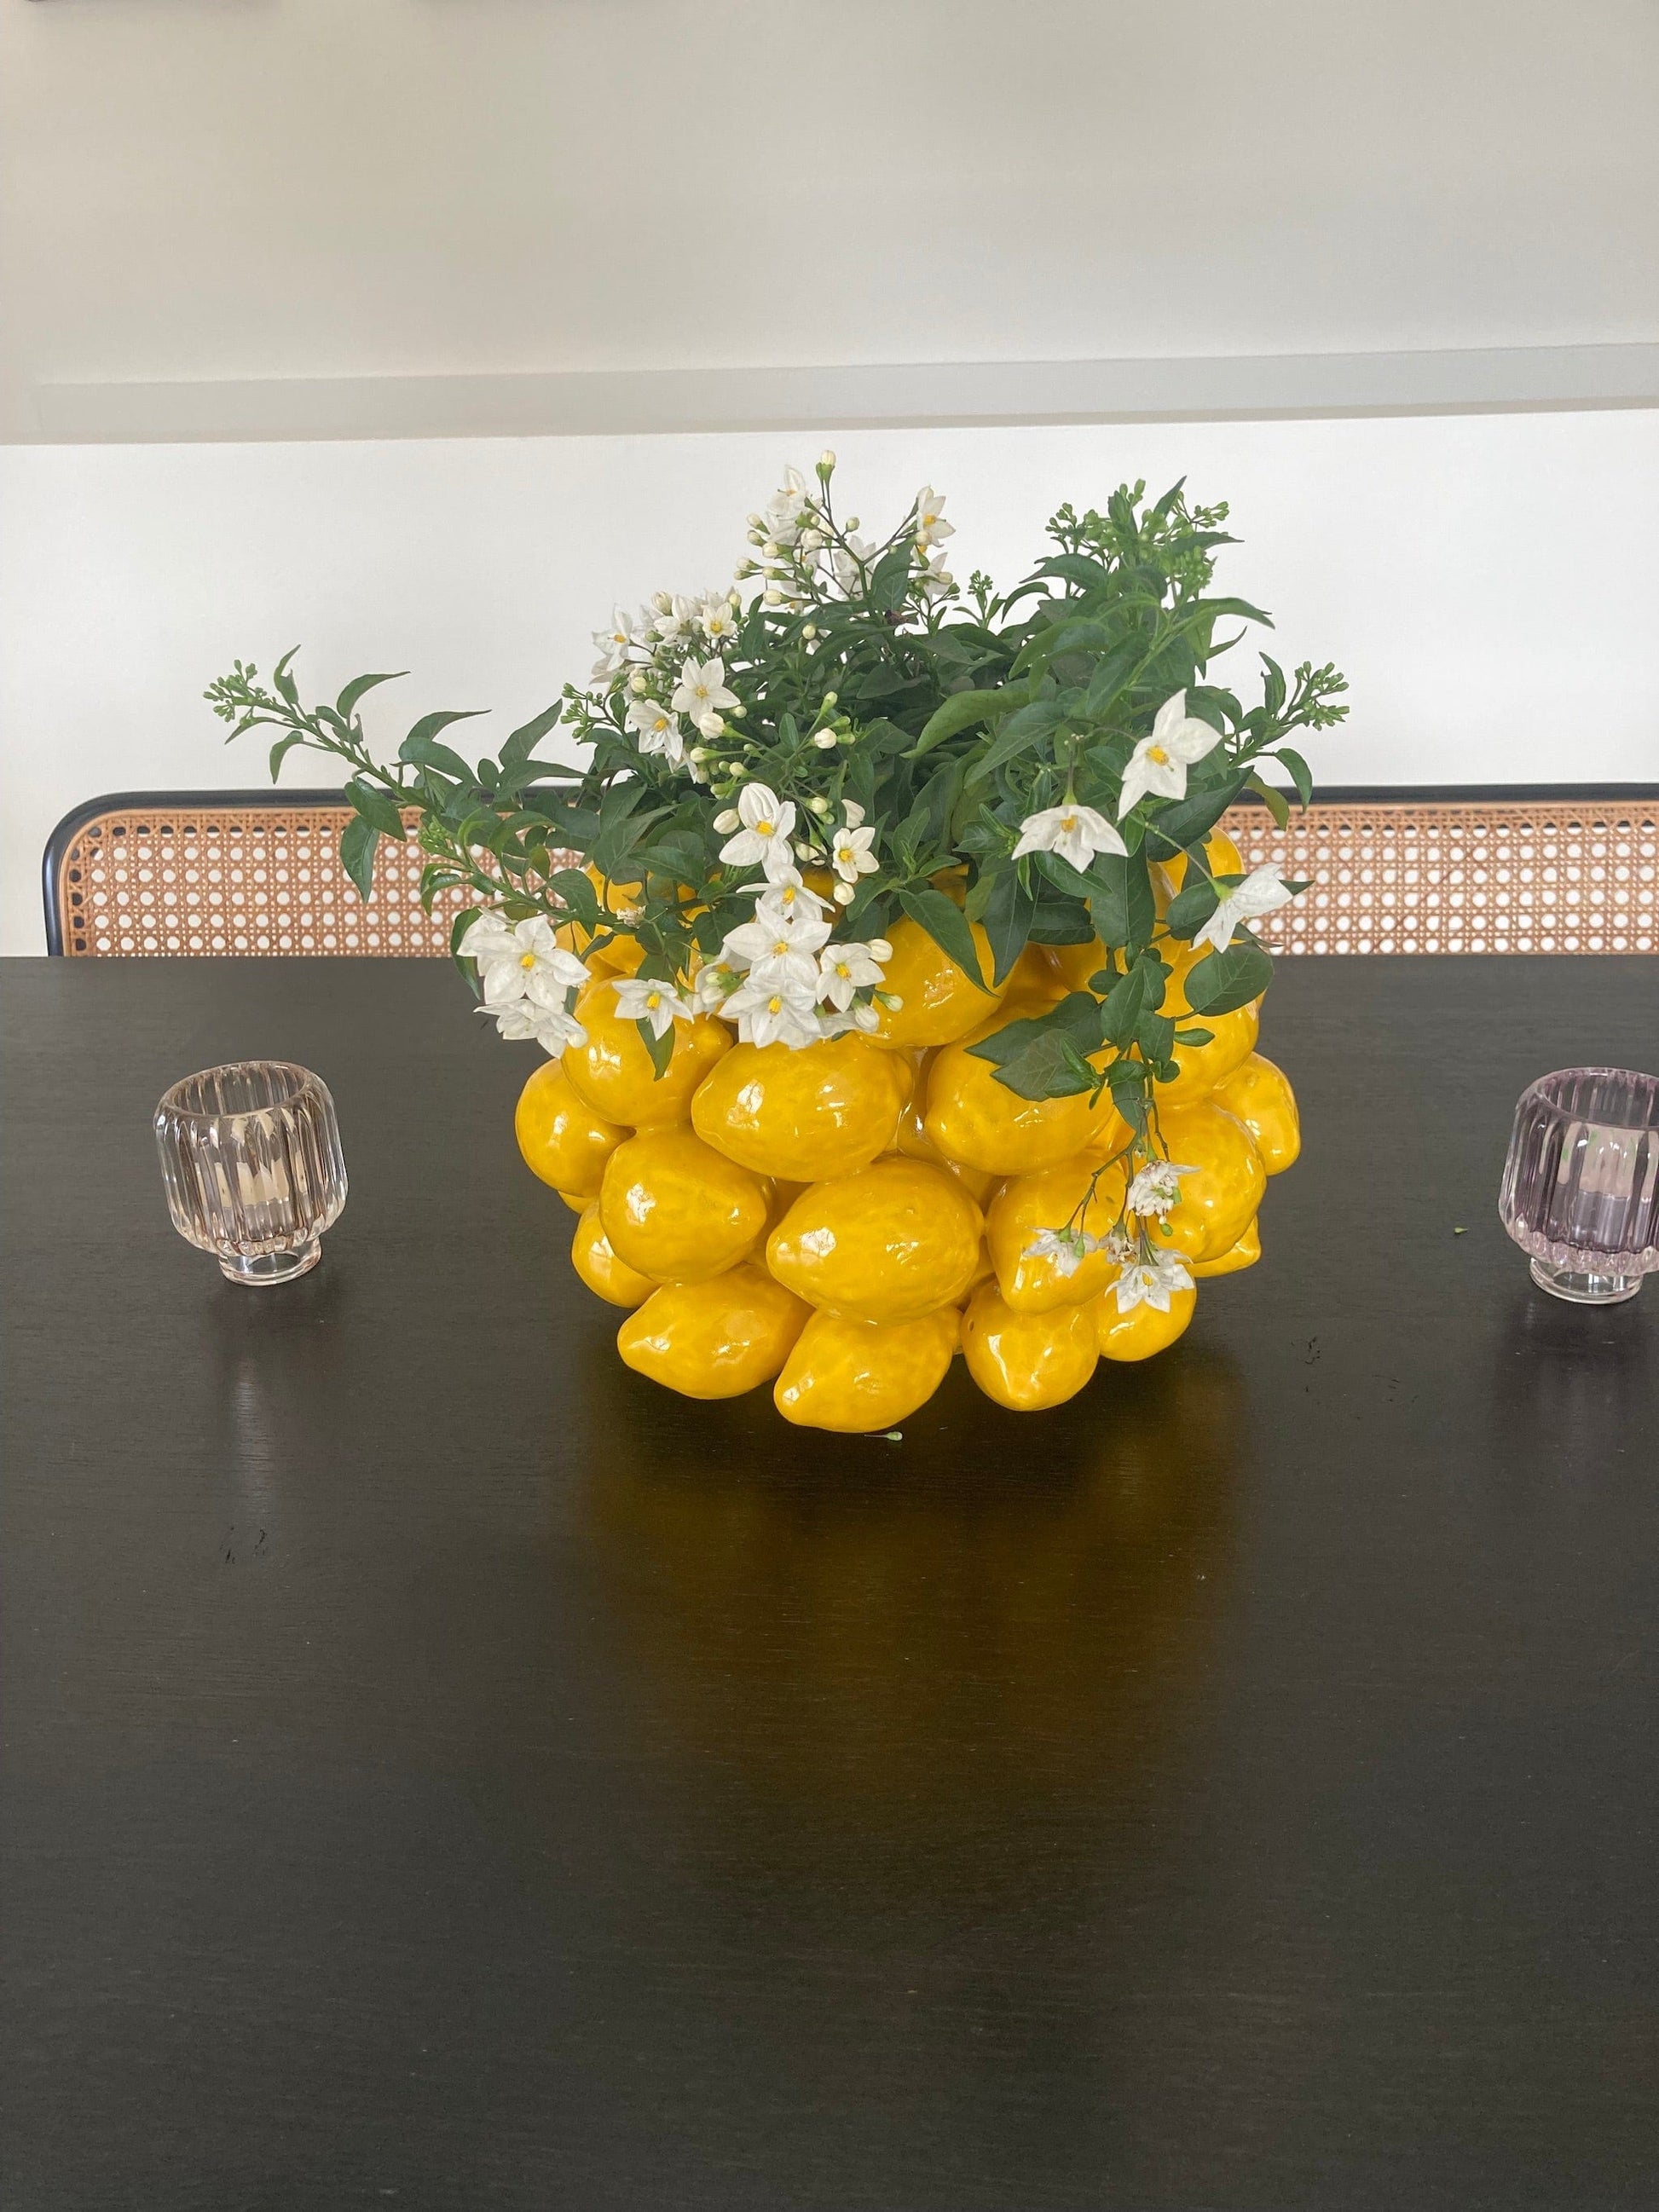 Zitronenvase aus Keramik, verziert mit gelben Zitronen